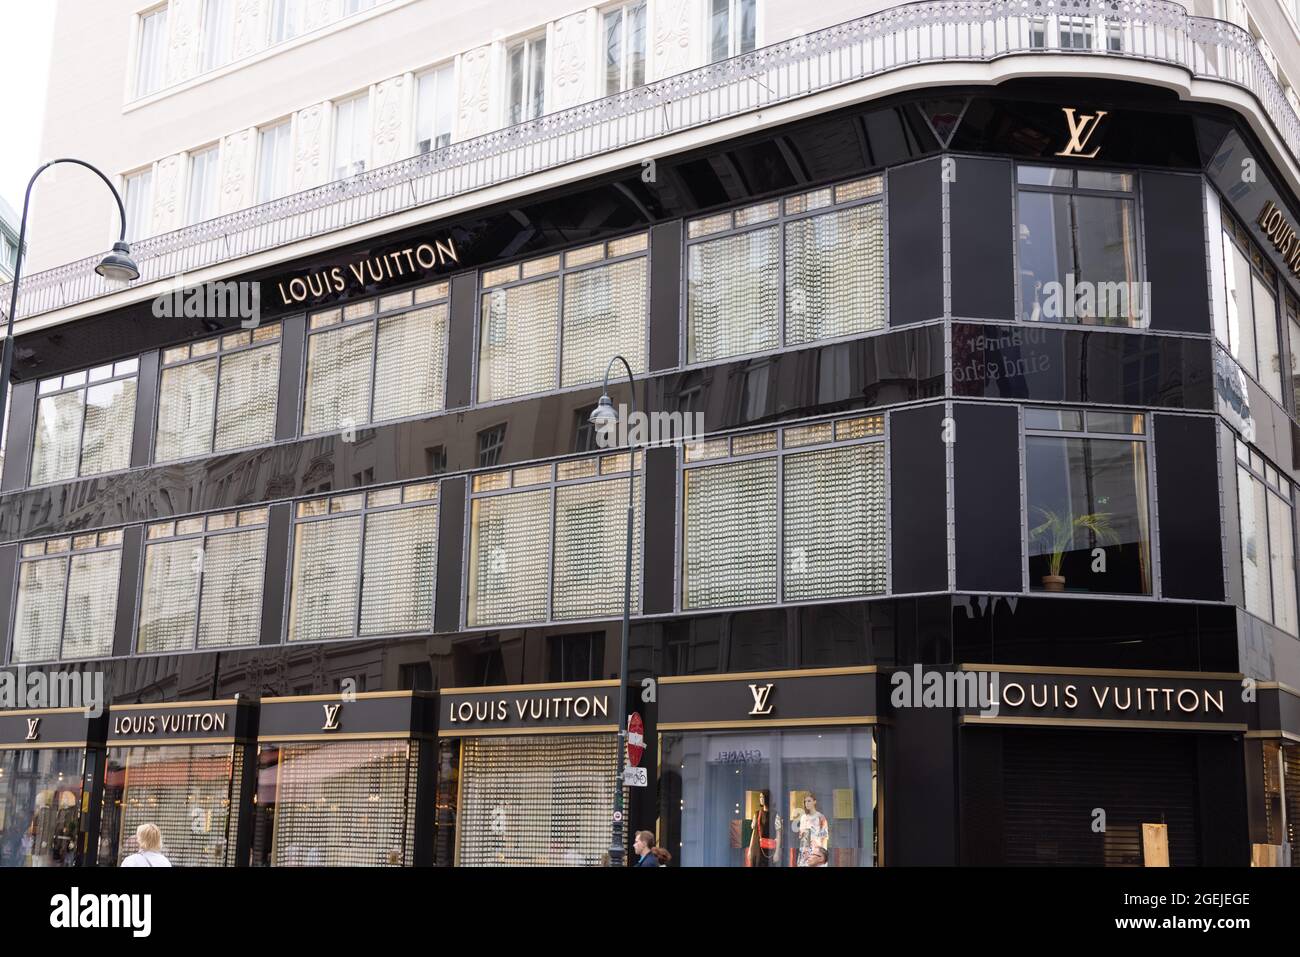 Artwork On Exterior Louis Vuitton Store Editorial Stock Photo - Stock Image